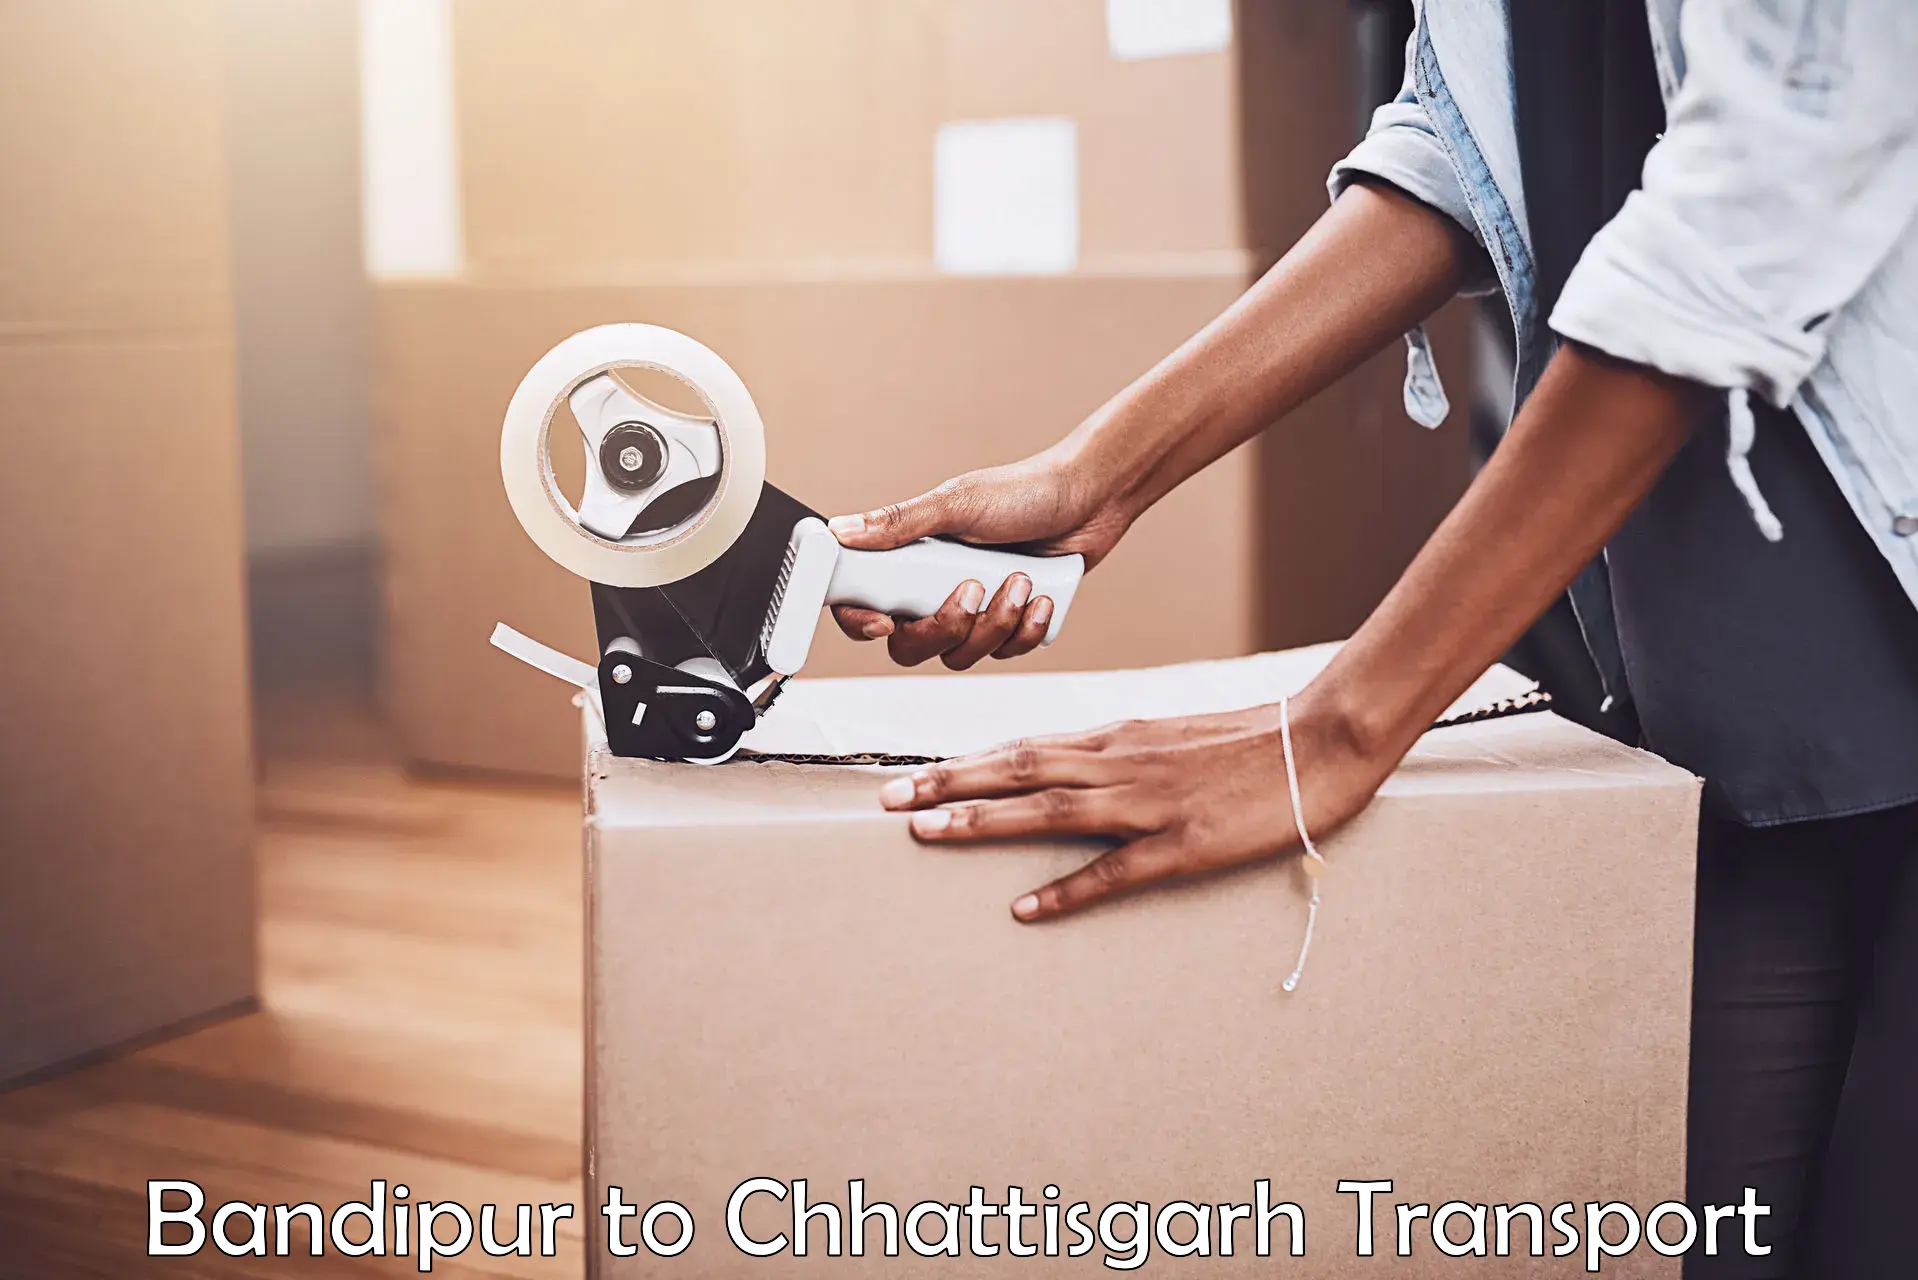 Bike transport service Bandipur to Chhattisgarh